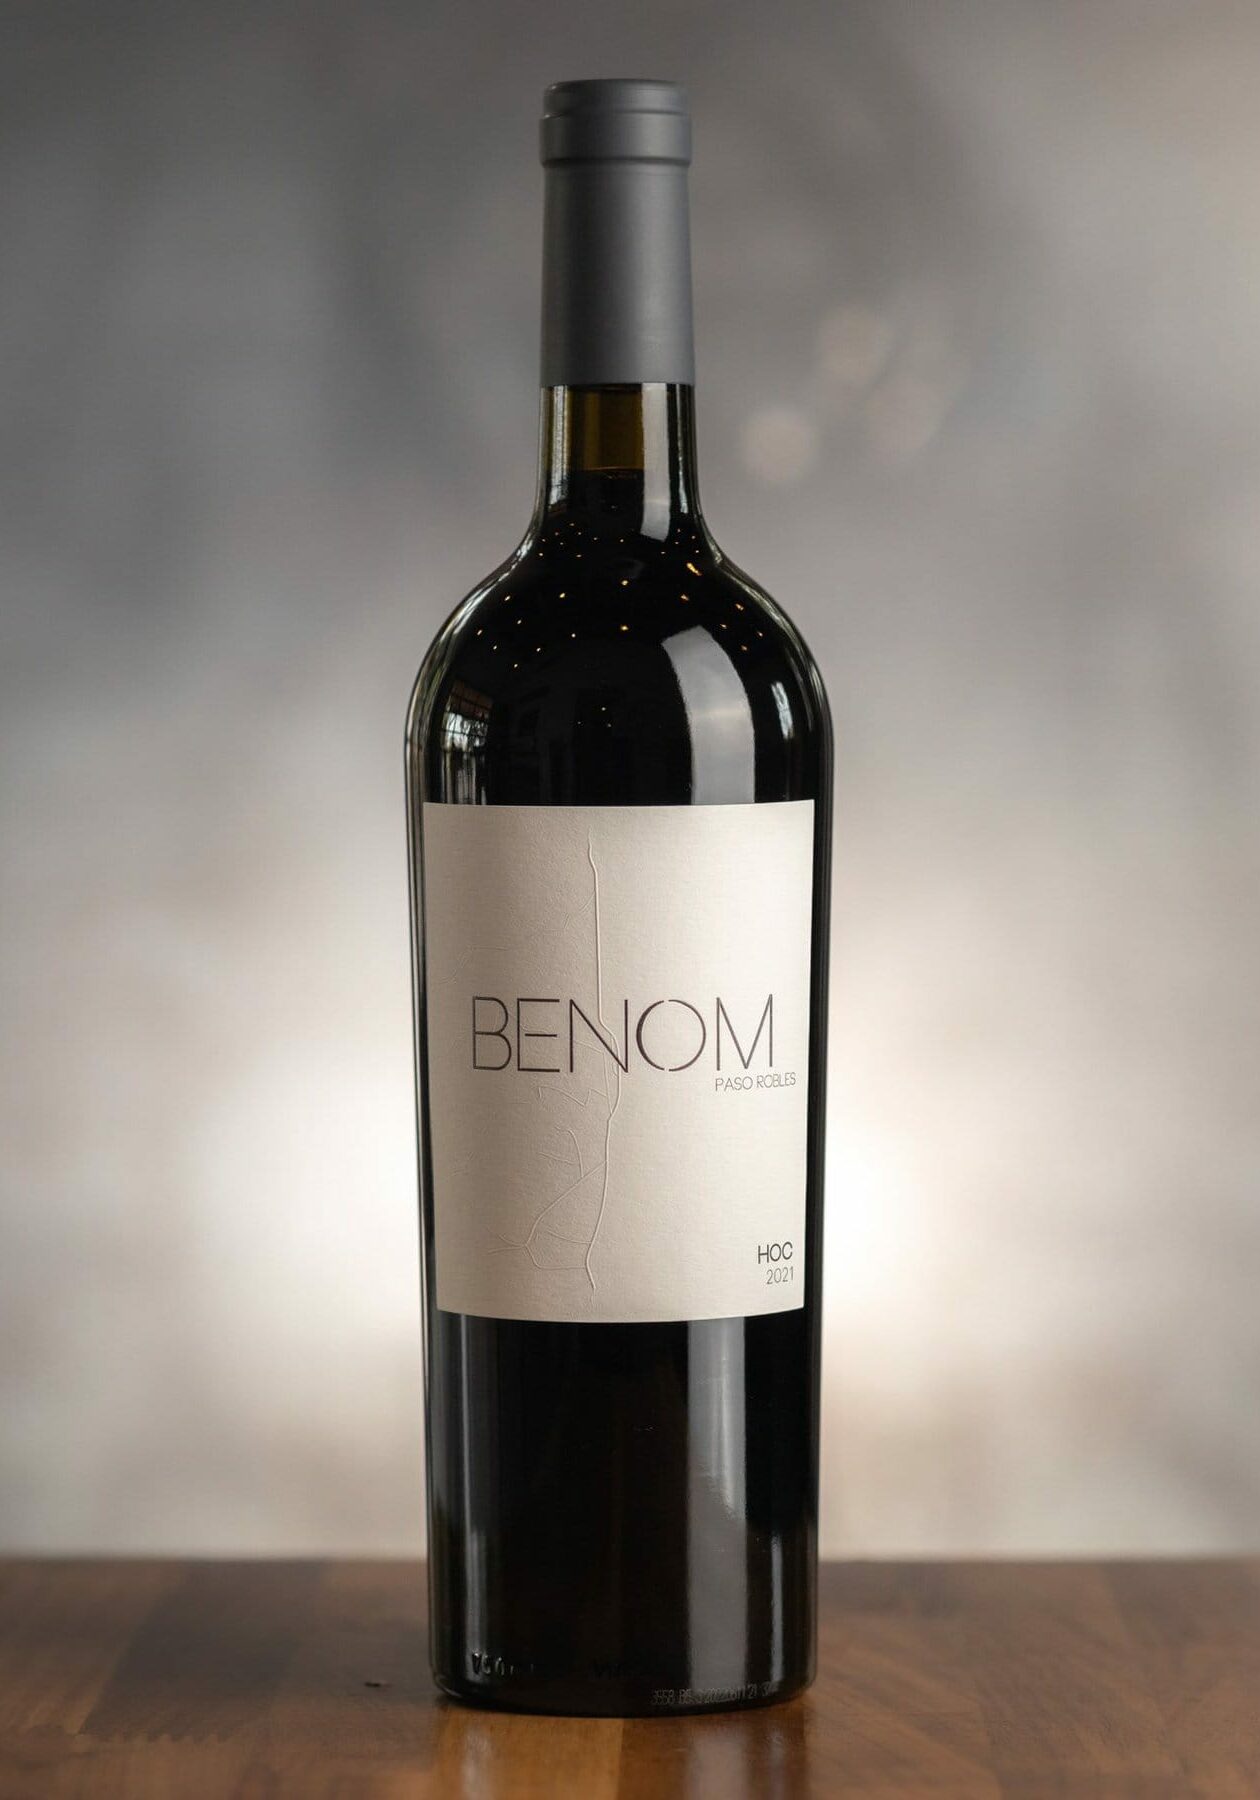 A bottle of BENOM's Hoc wine - Carignan, Cabernet Sauvignon, Syrah